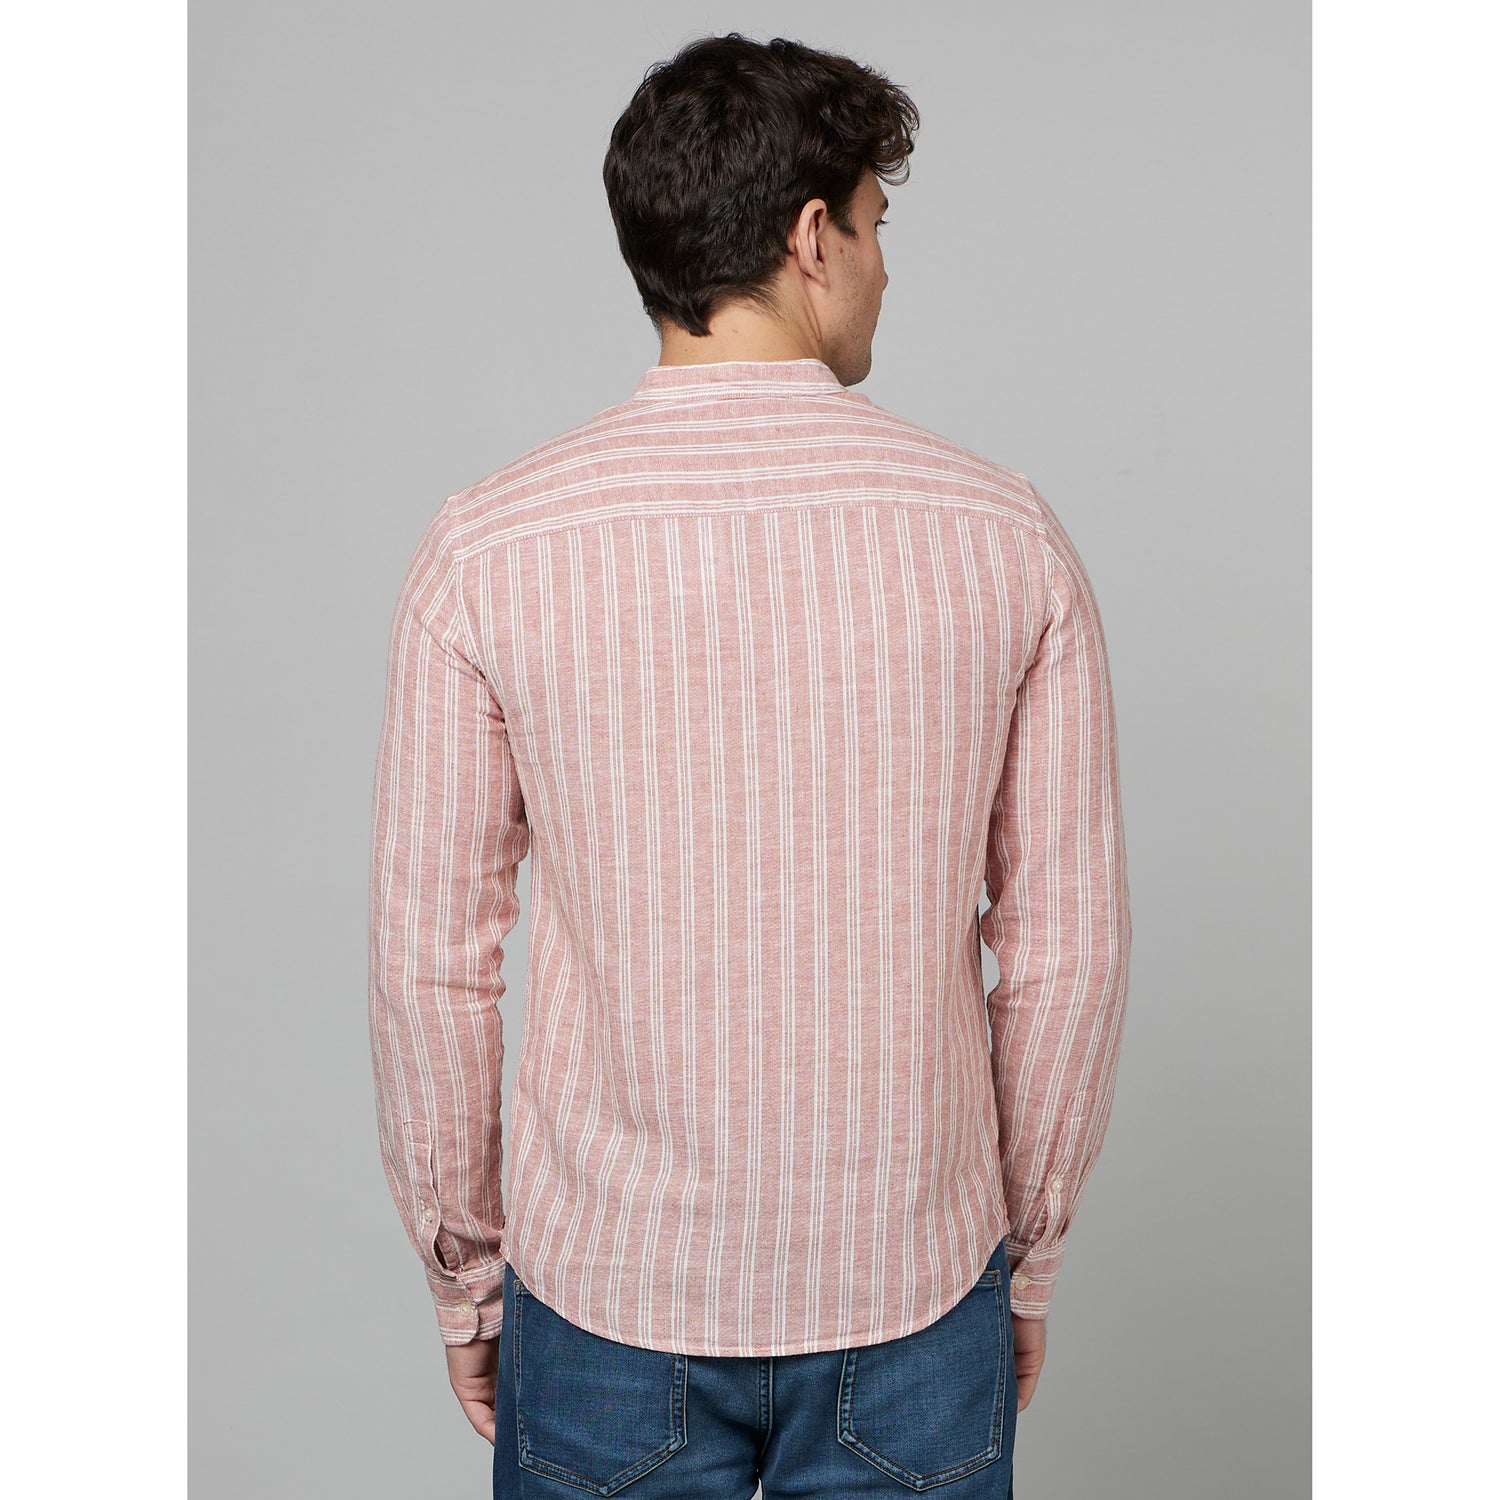 Red Classic Striped Mandarin Collar Cotton Casual Shirt (DARAYLIN)